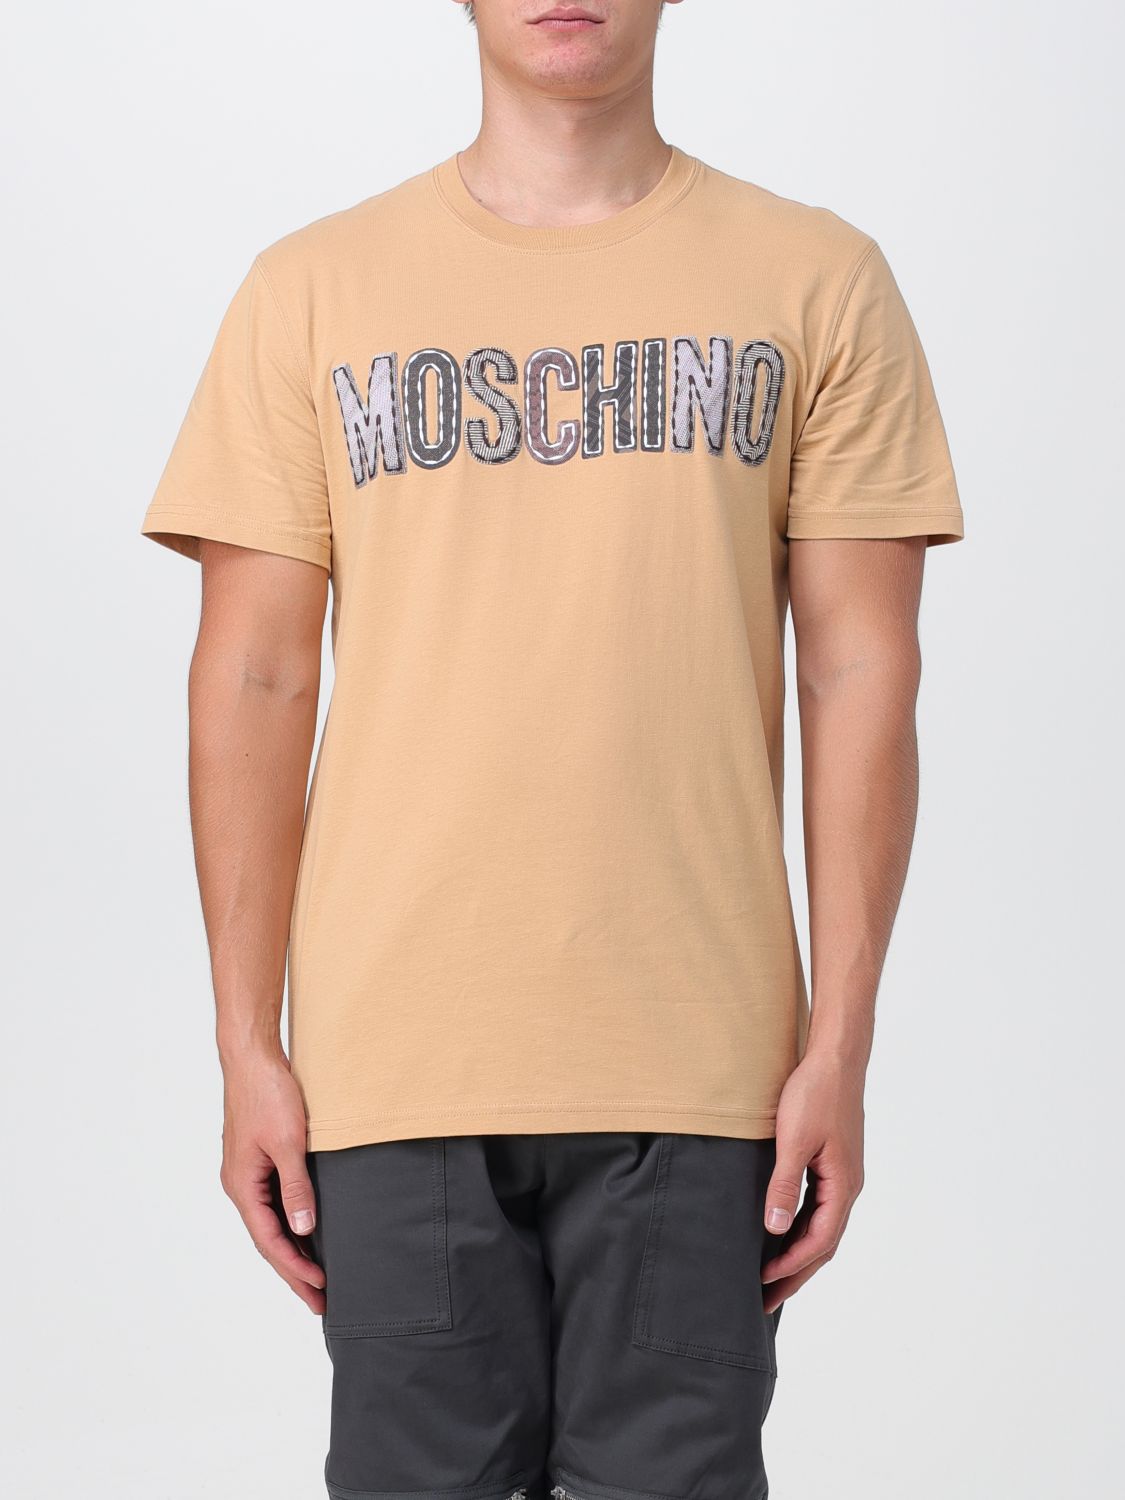 Moschino Couture T-shirt  Herren Farbe Beige